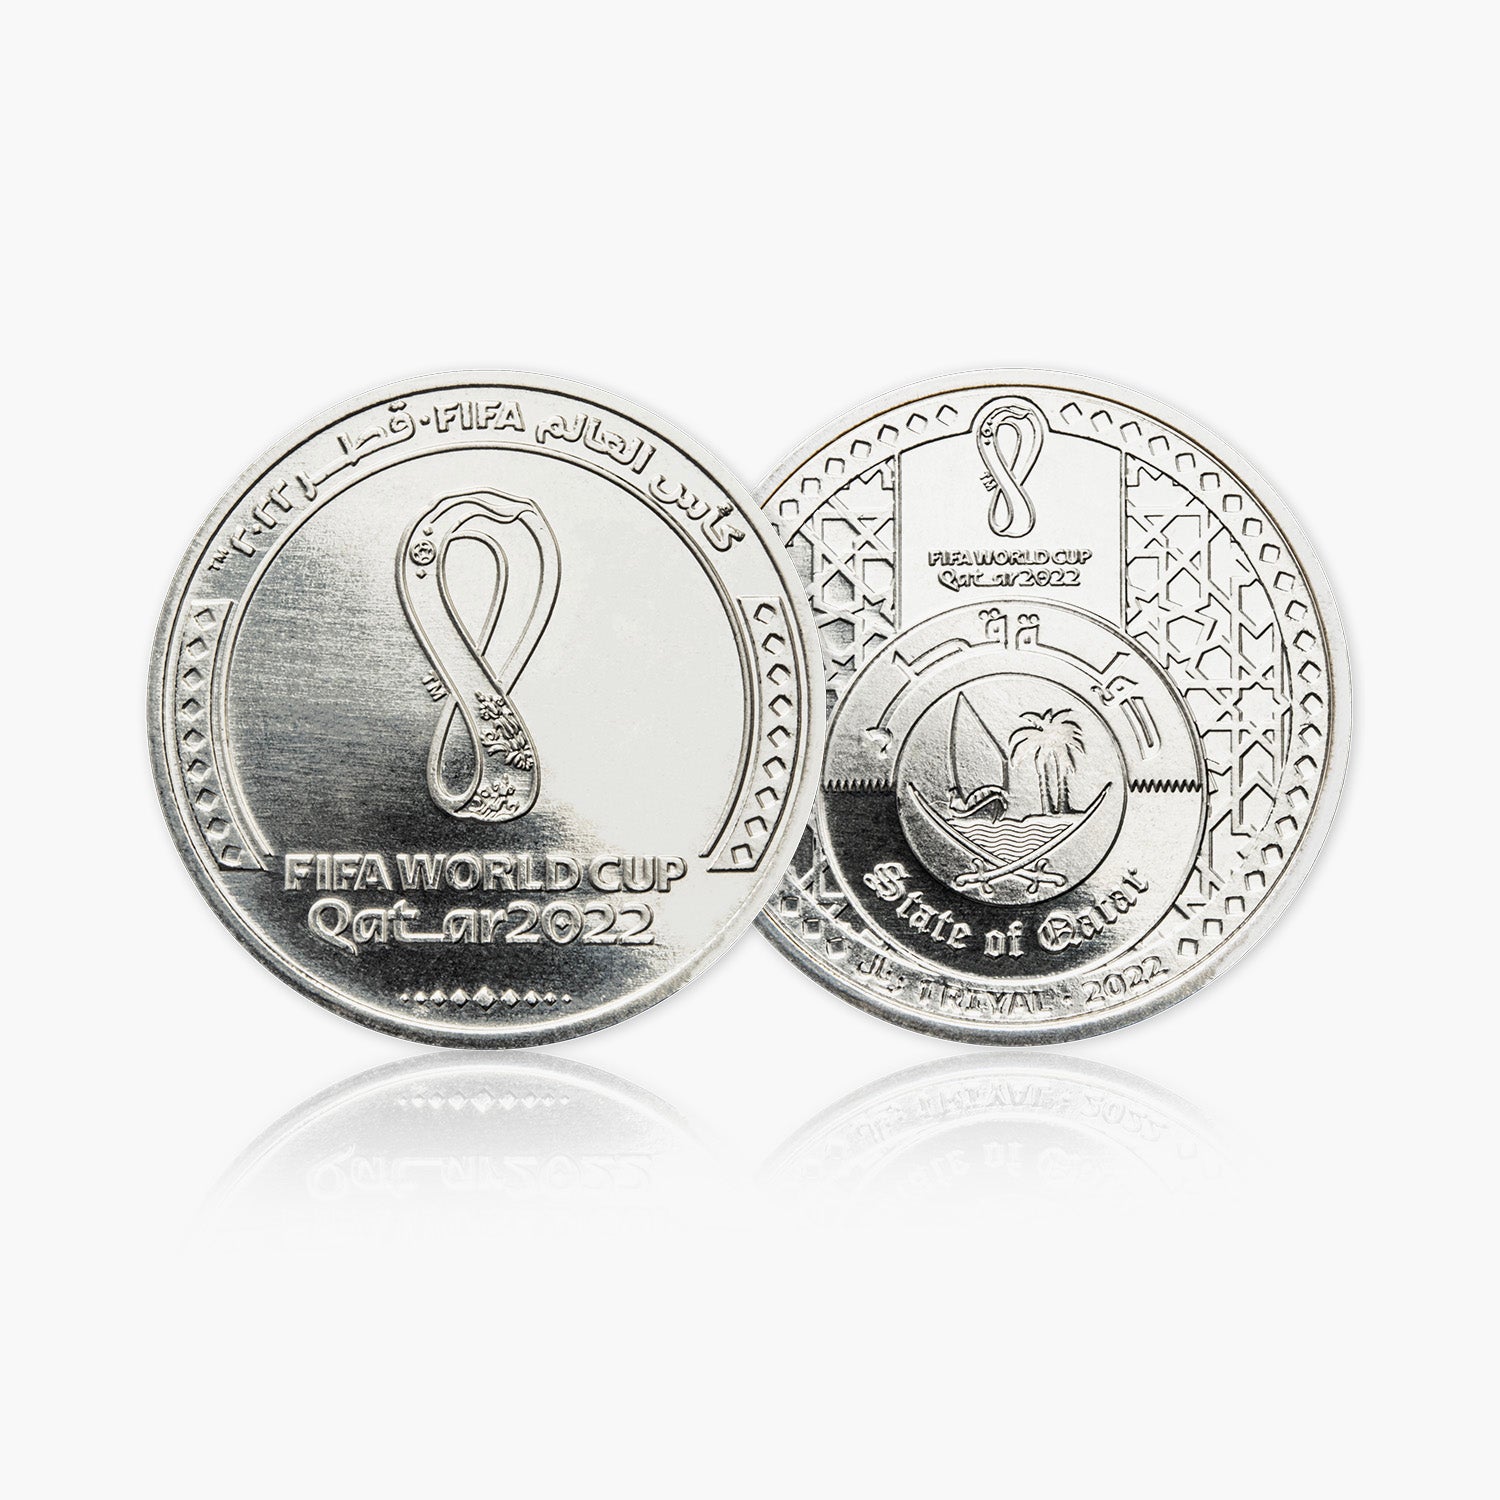 FIFA World Cup 2022™ Qatar Emblem Riyal Coin